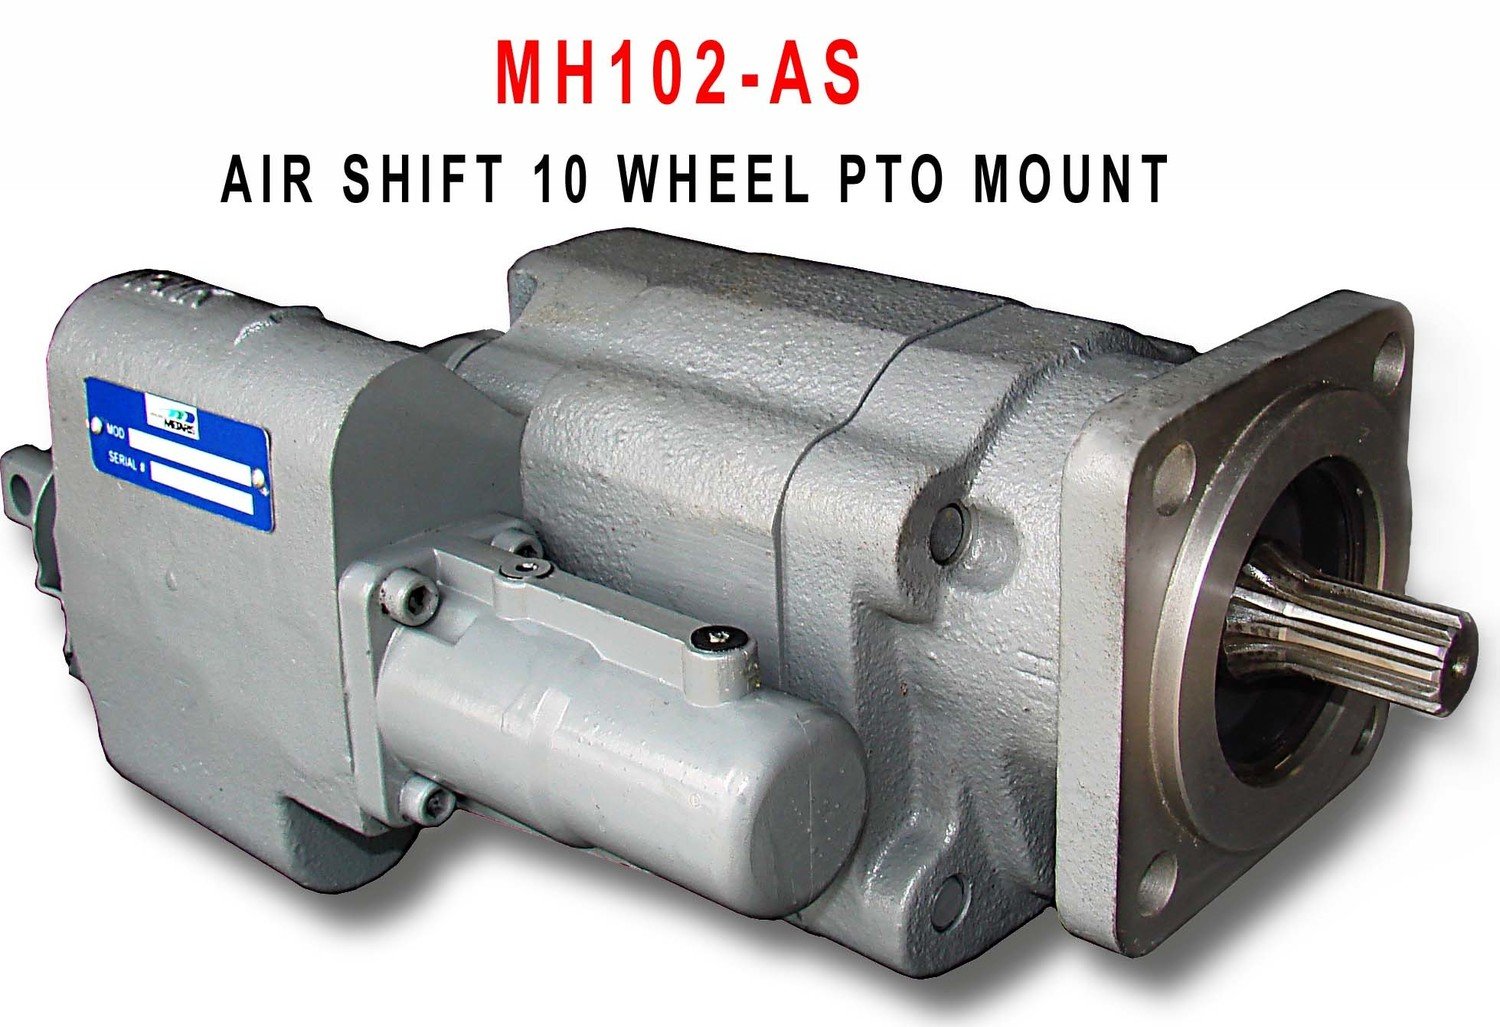 Direct-Mount 10-Wheel Dump Pump - Air Shift